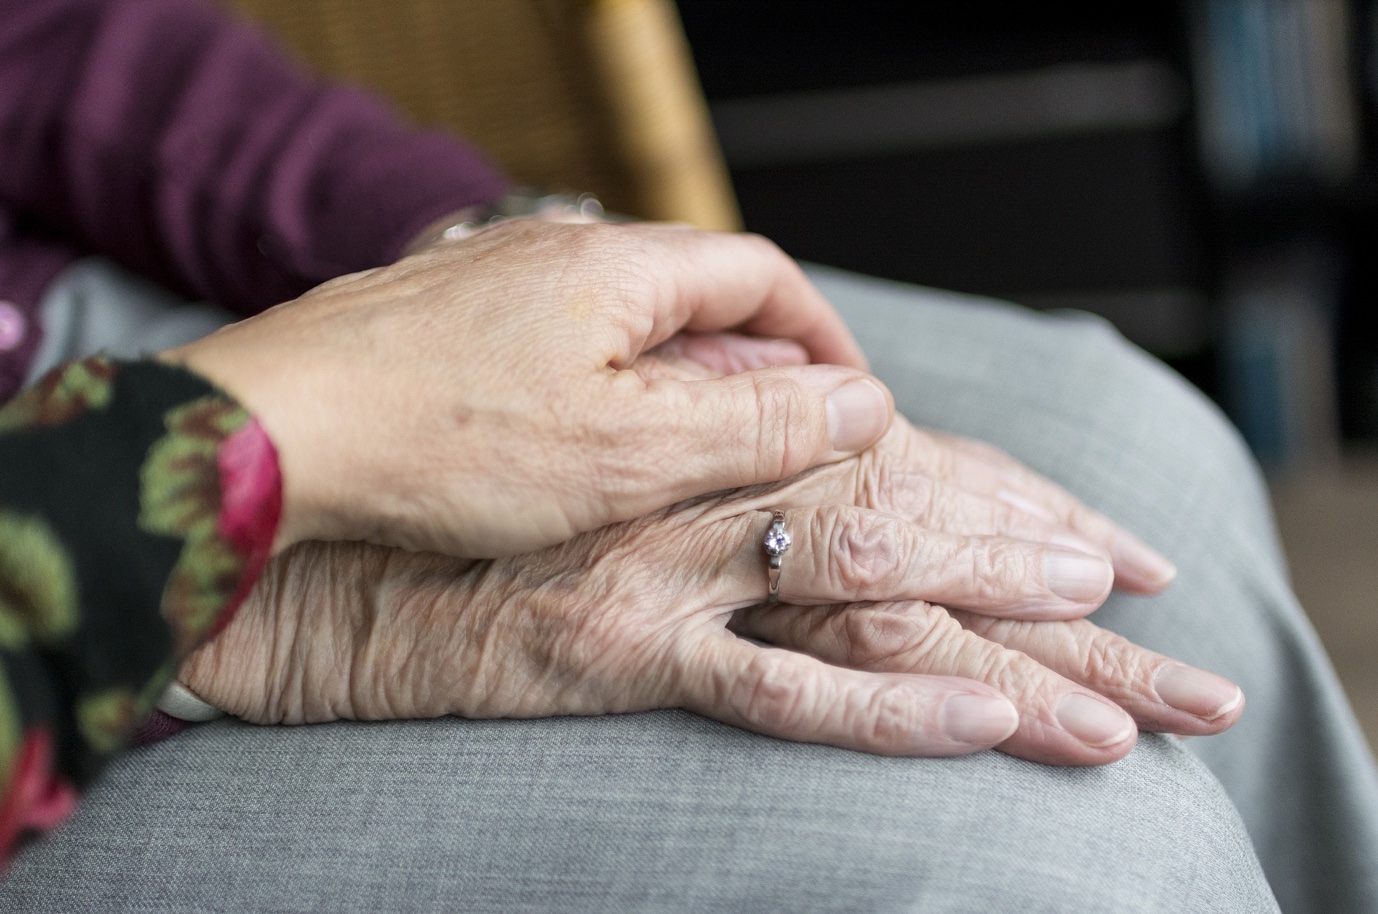 Adult hand resting on elderly hands; image by Sabine Van Erp, via Pixabay.com.